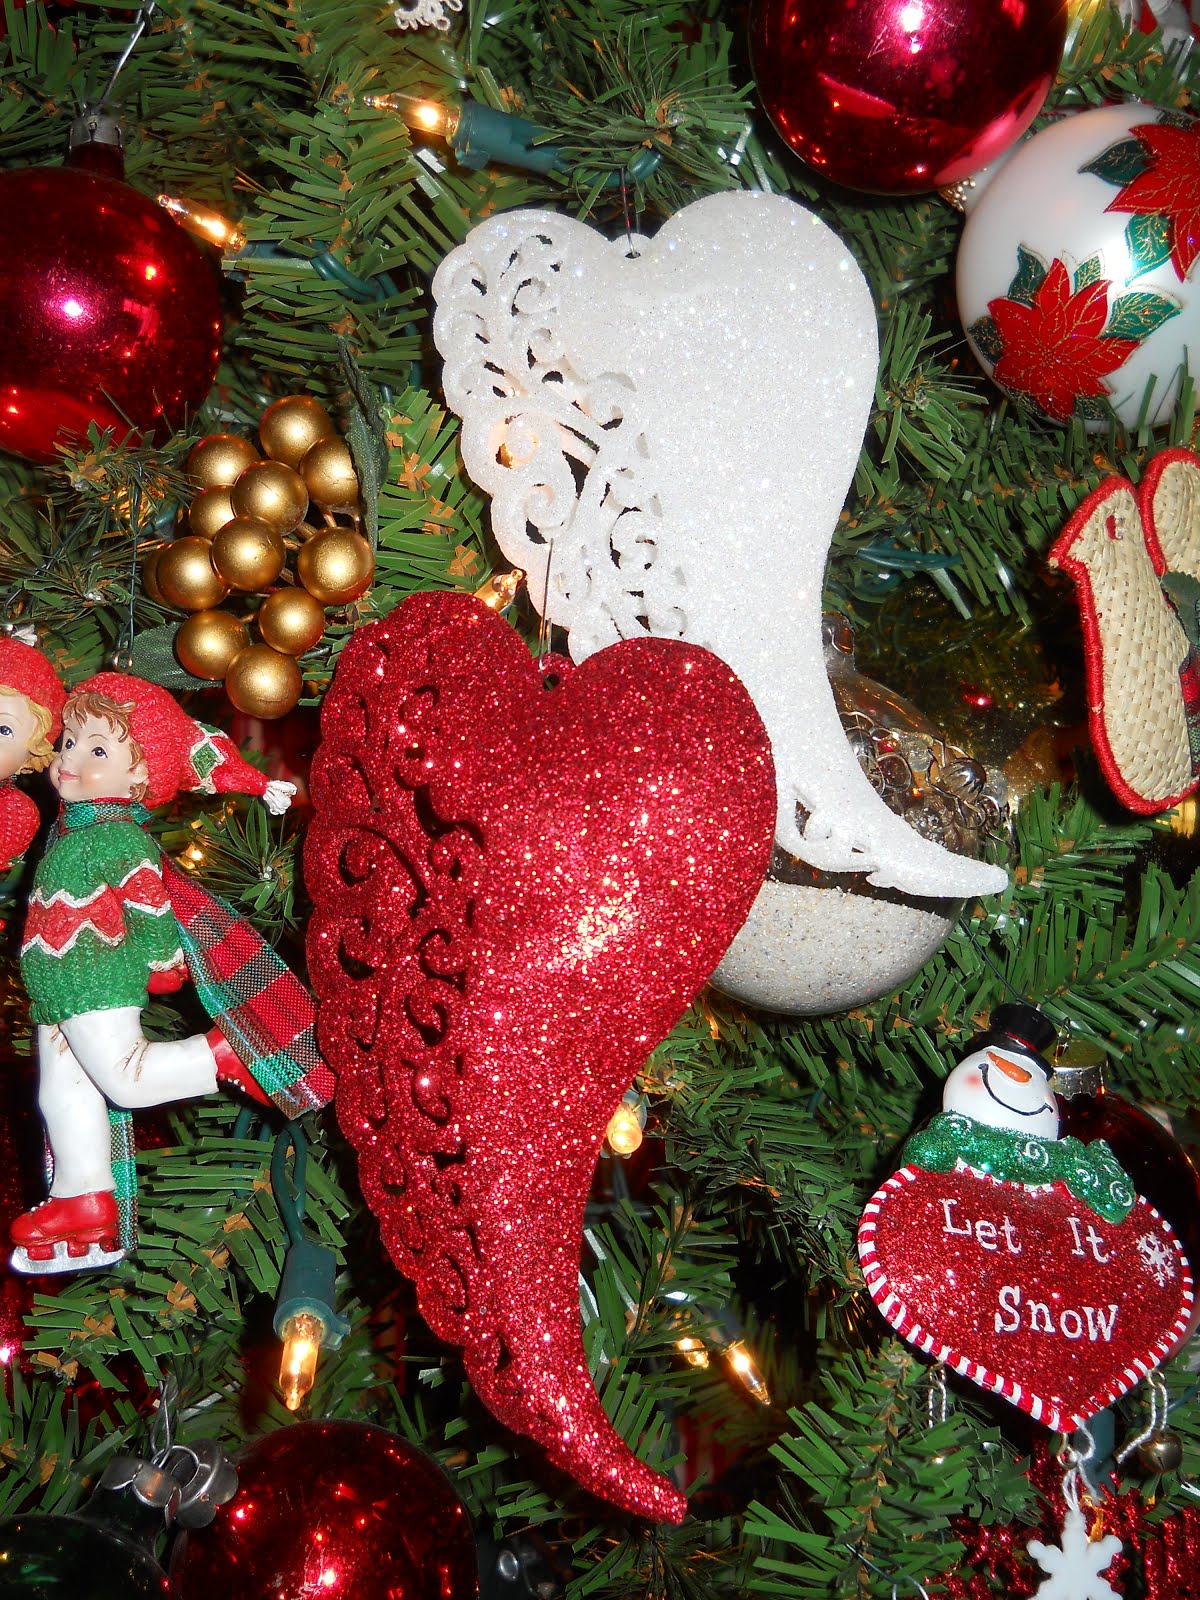 Hearts on Christmas tree